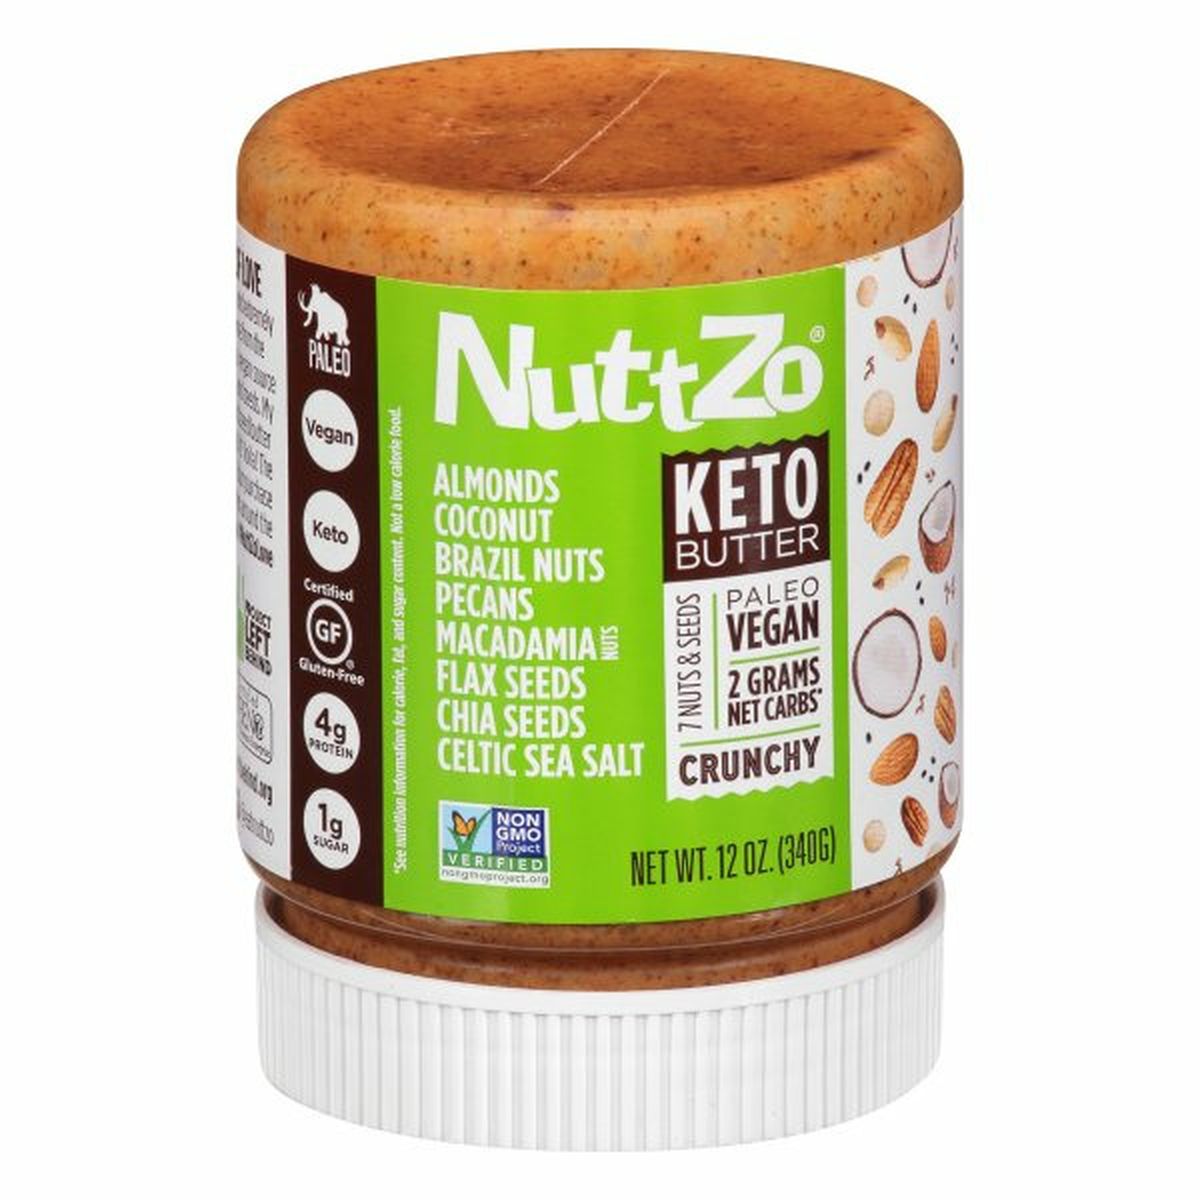 Calories in NuttZo Keto Butter, Crunchy